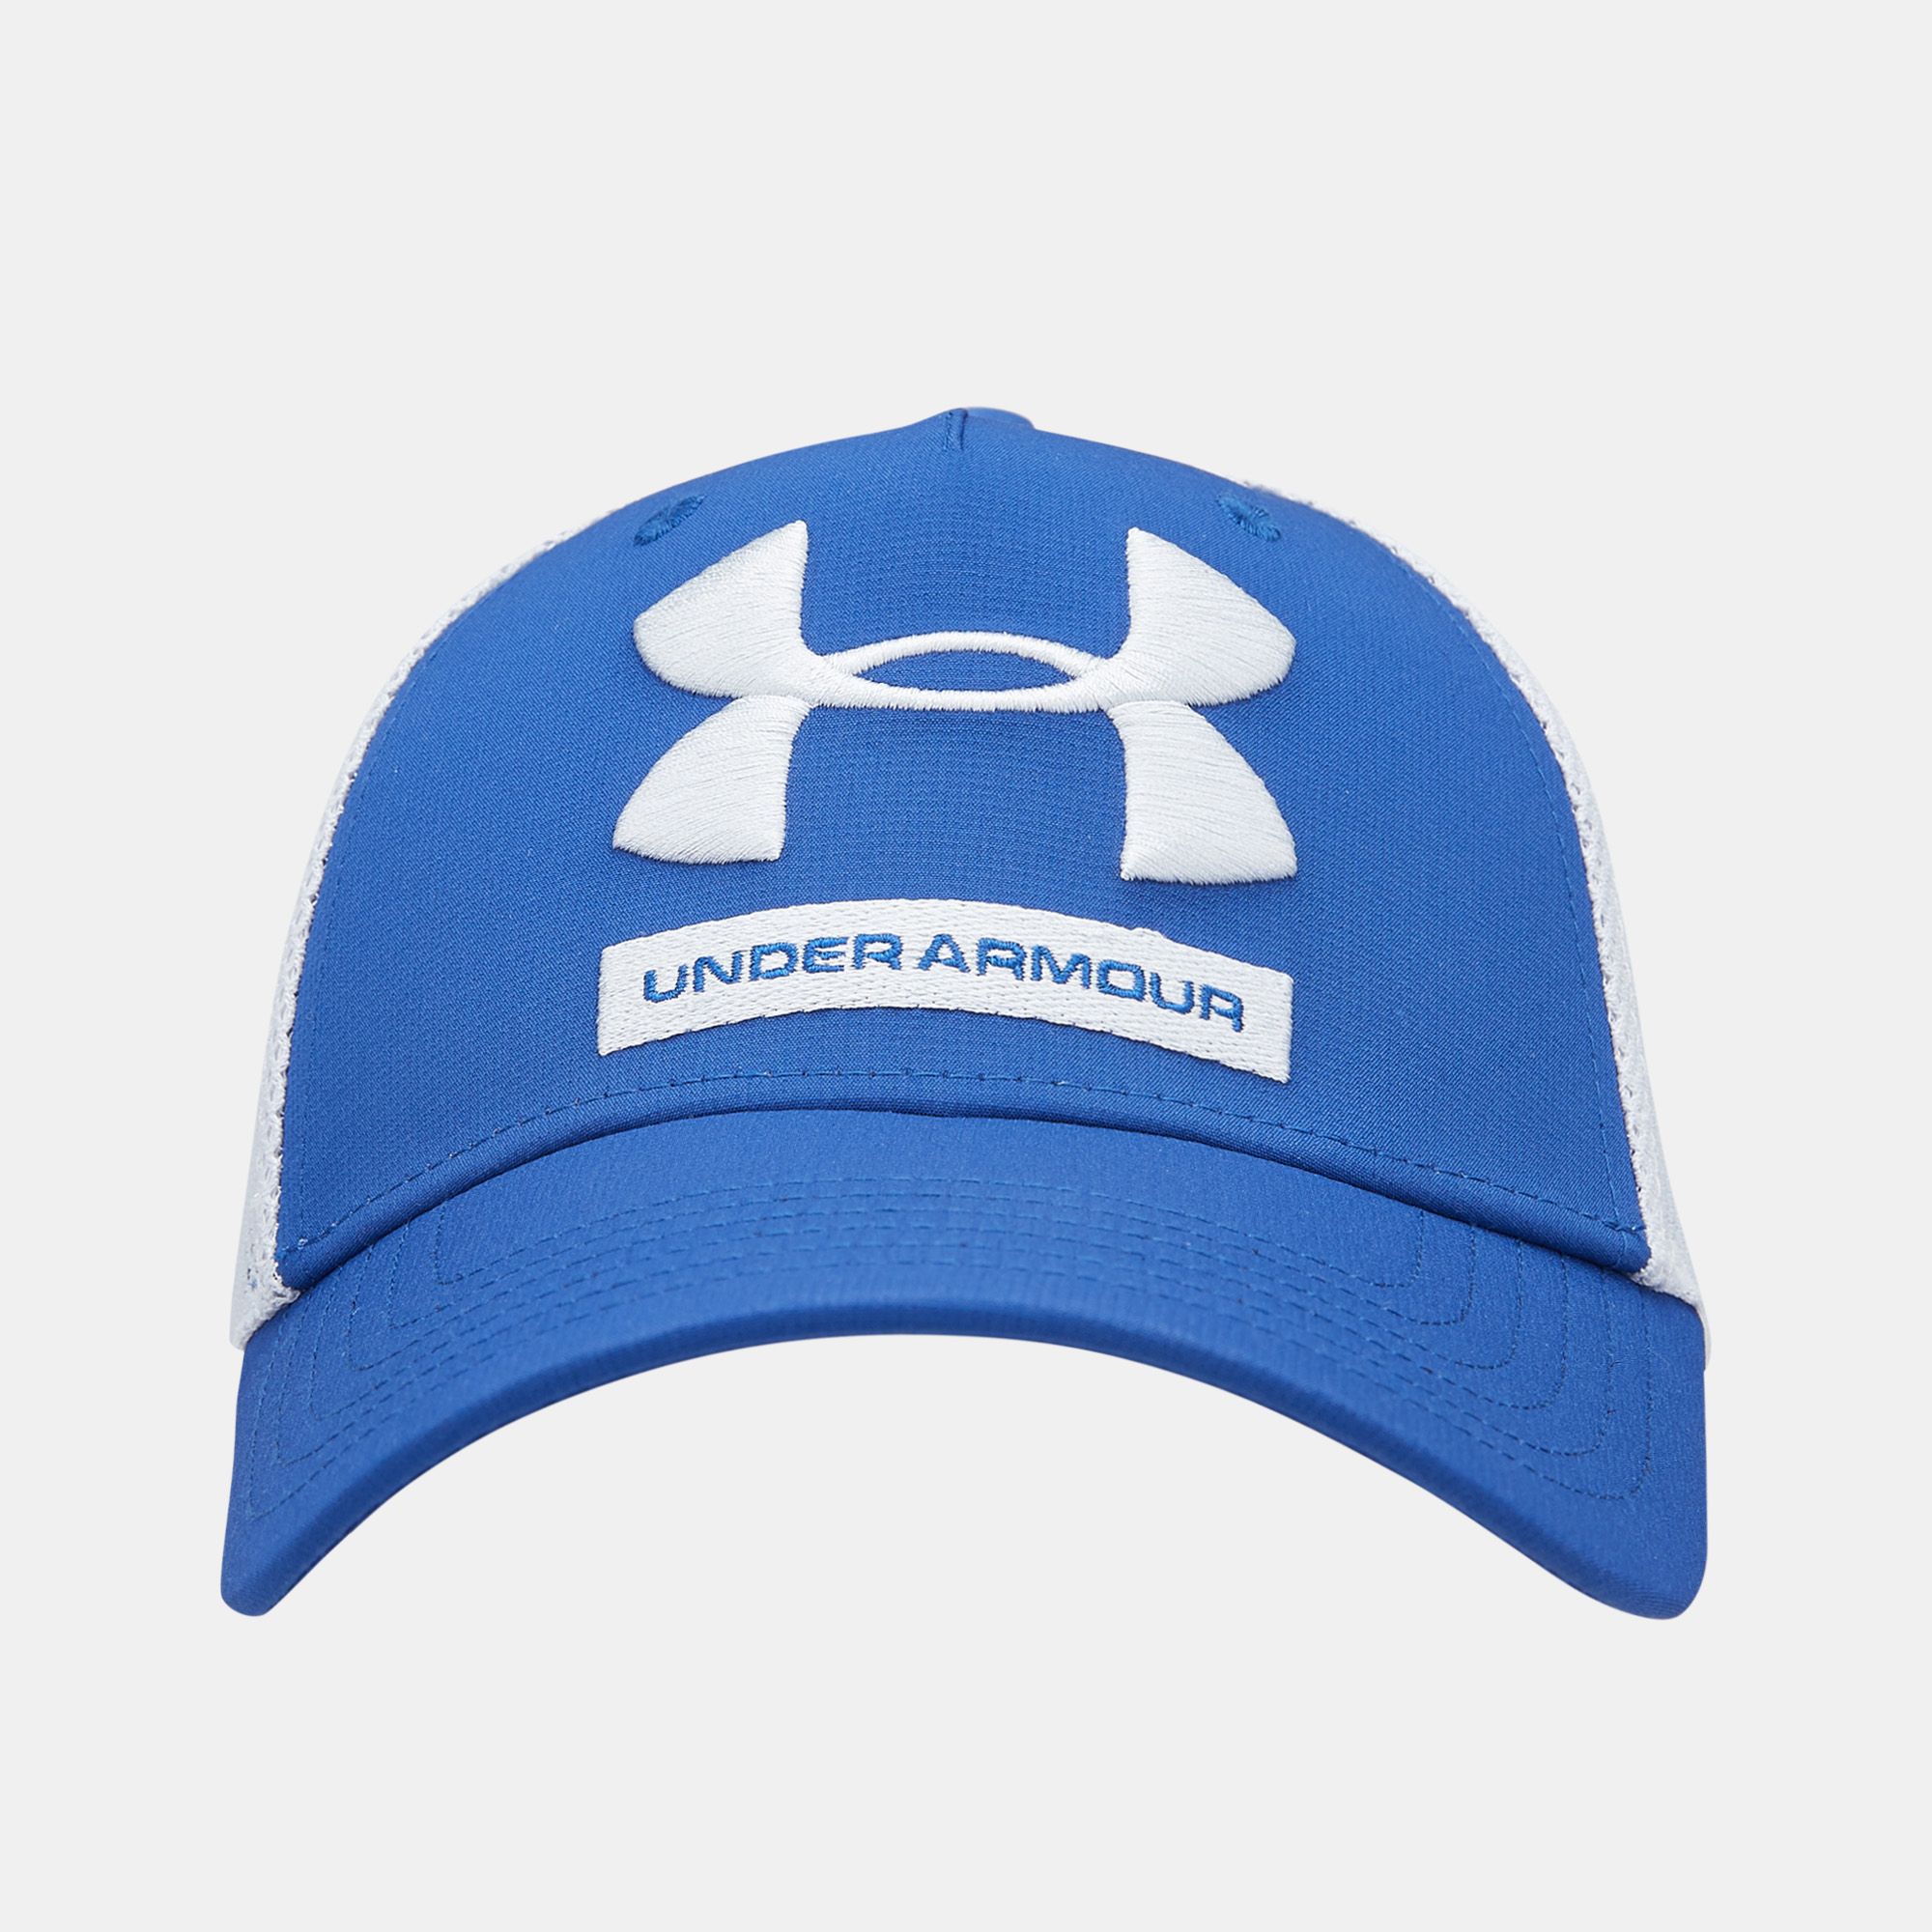 under armour blue cap